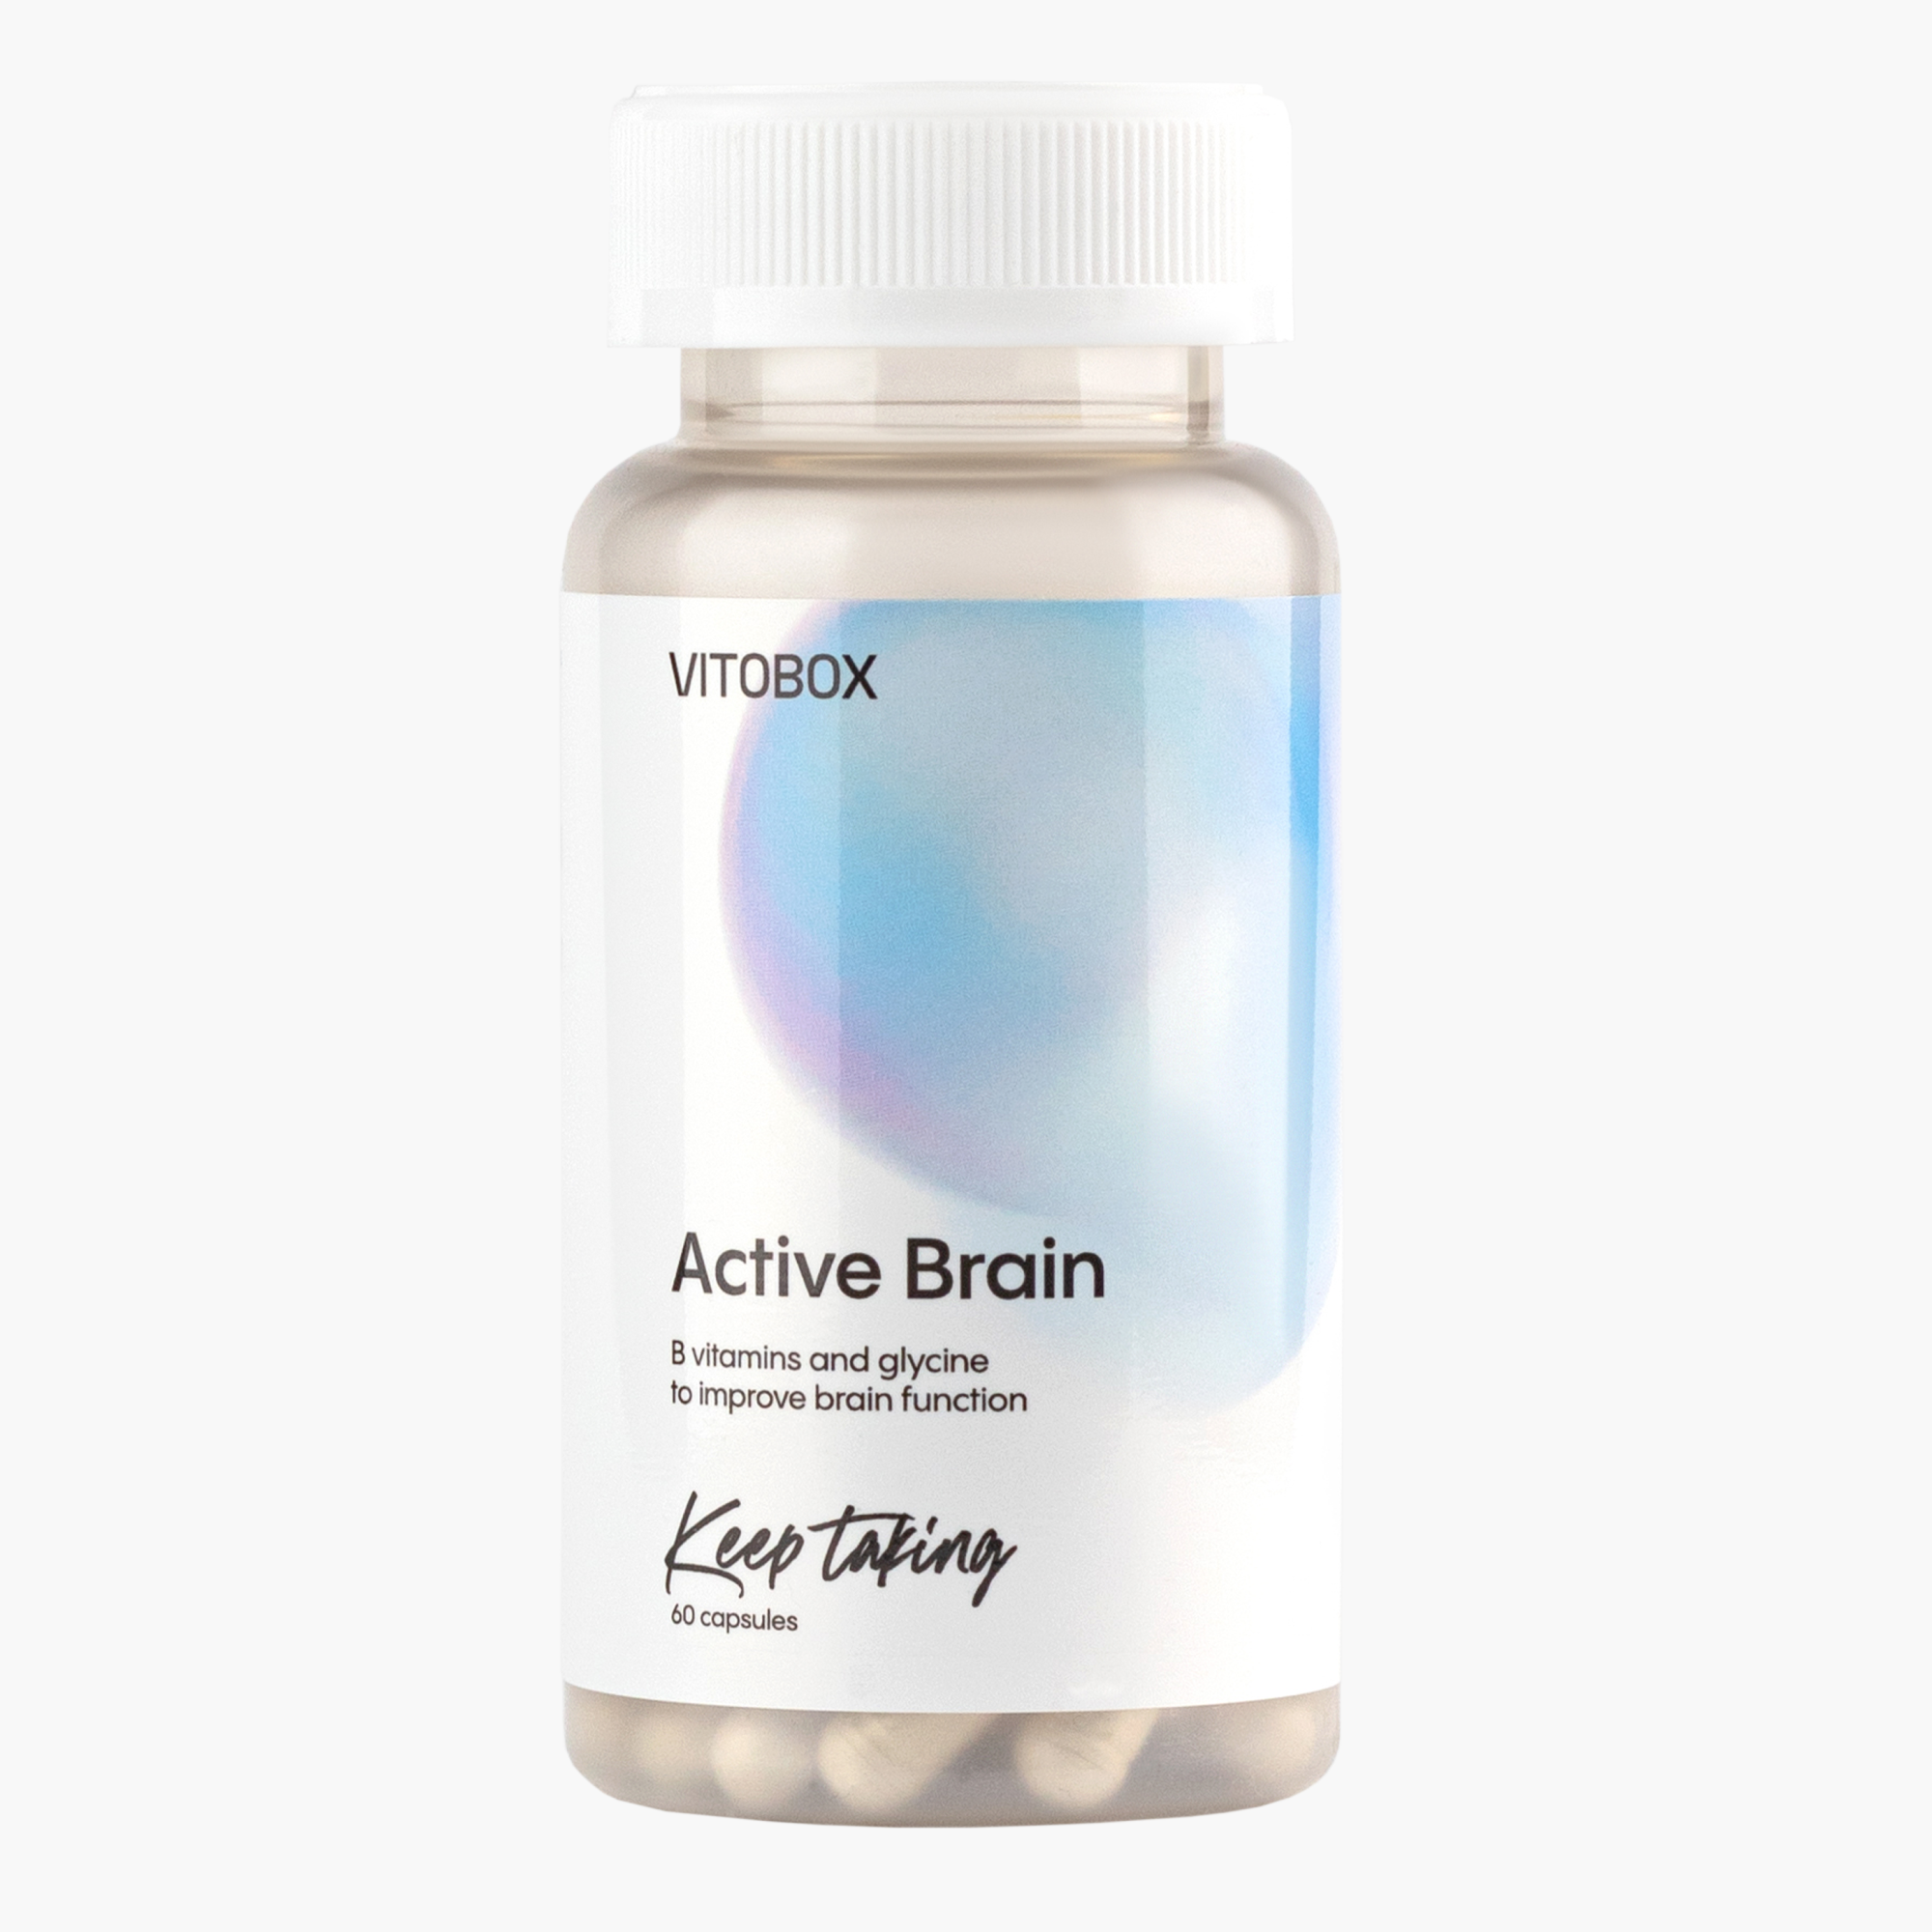 Active vitamin